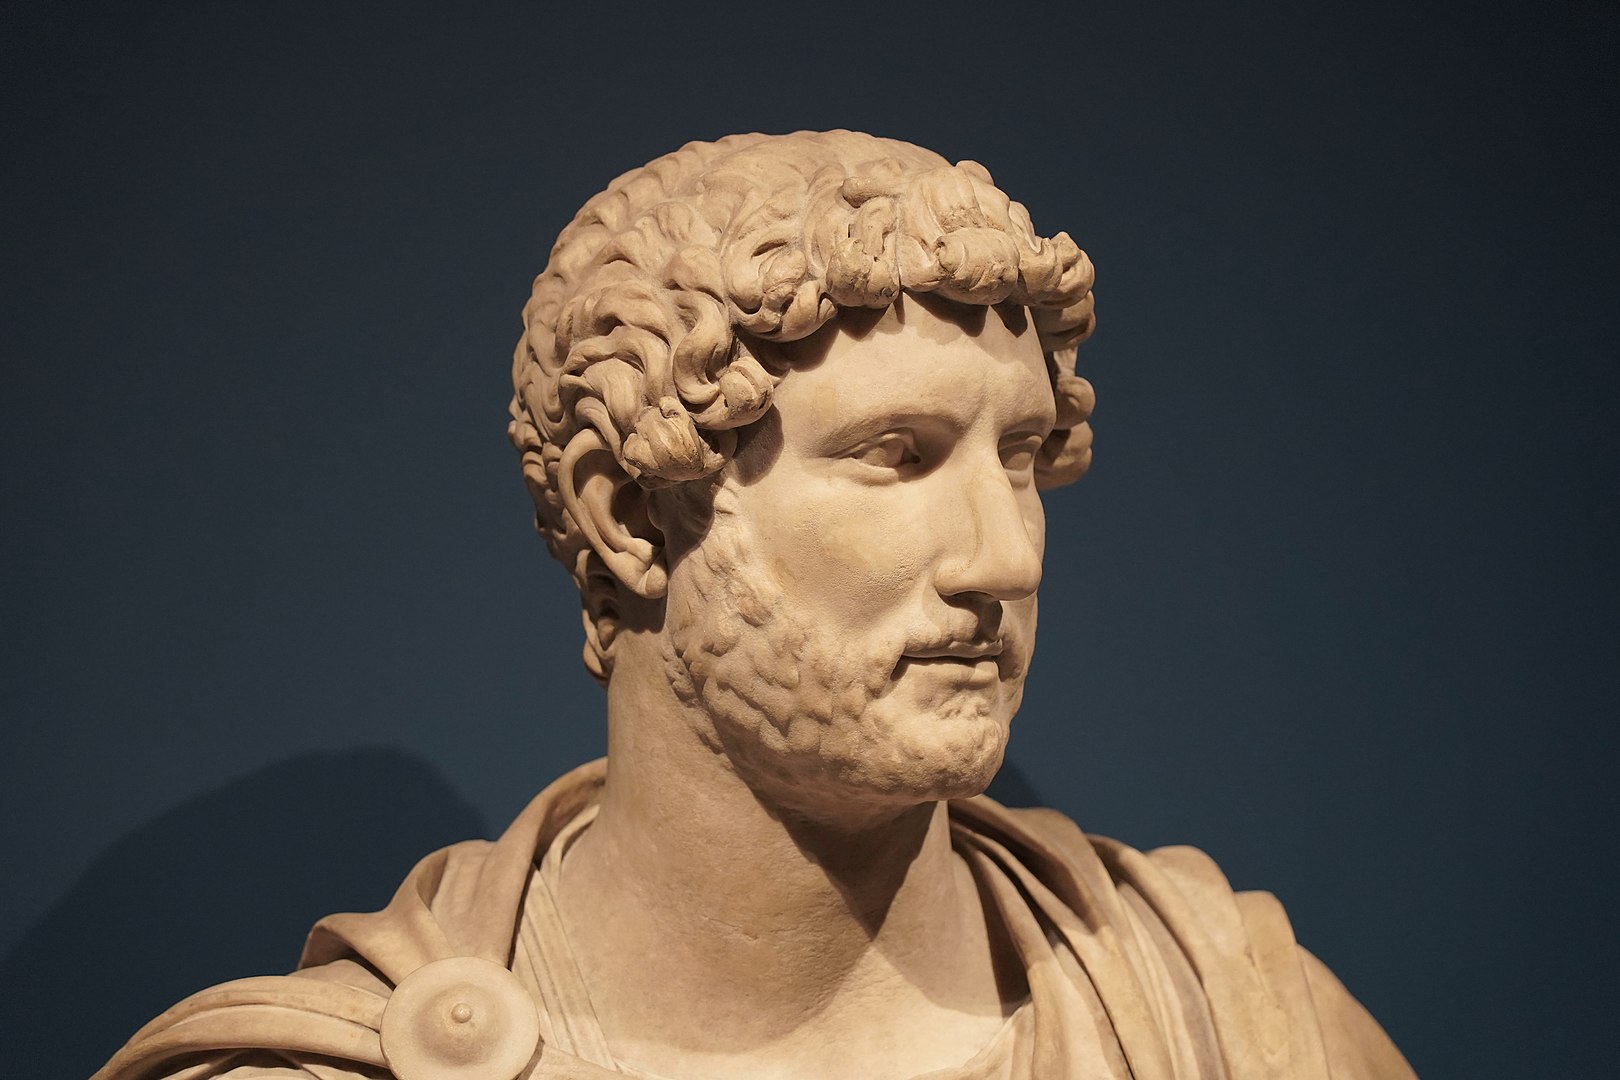 https://www.roman-britain.co.uk/wp-content/uploads/2022/06/Bust_of_Roman_Emperor_Hadrian_from_Tivoli.jpg